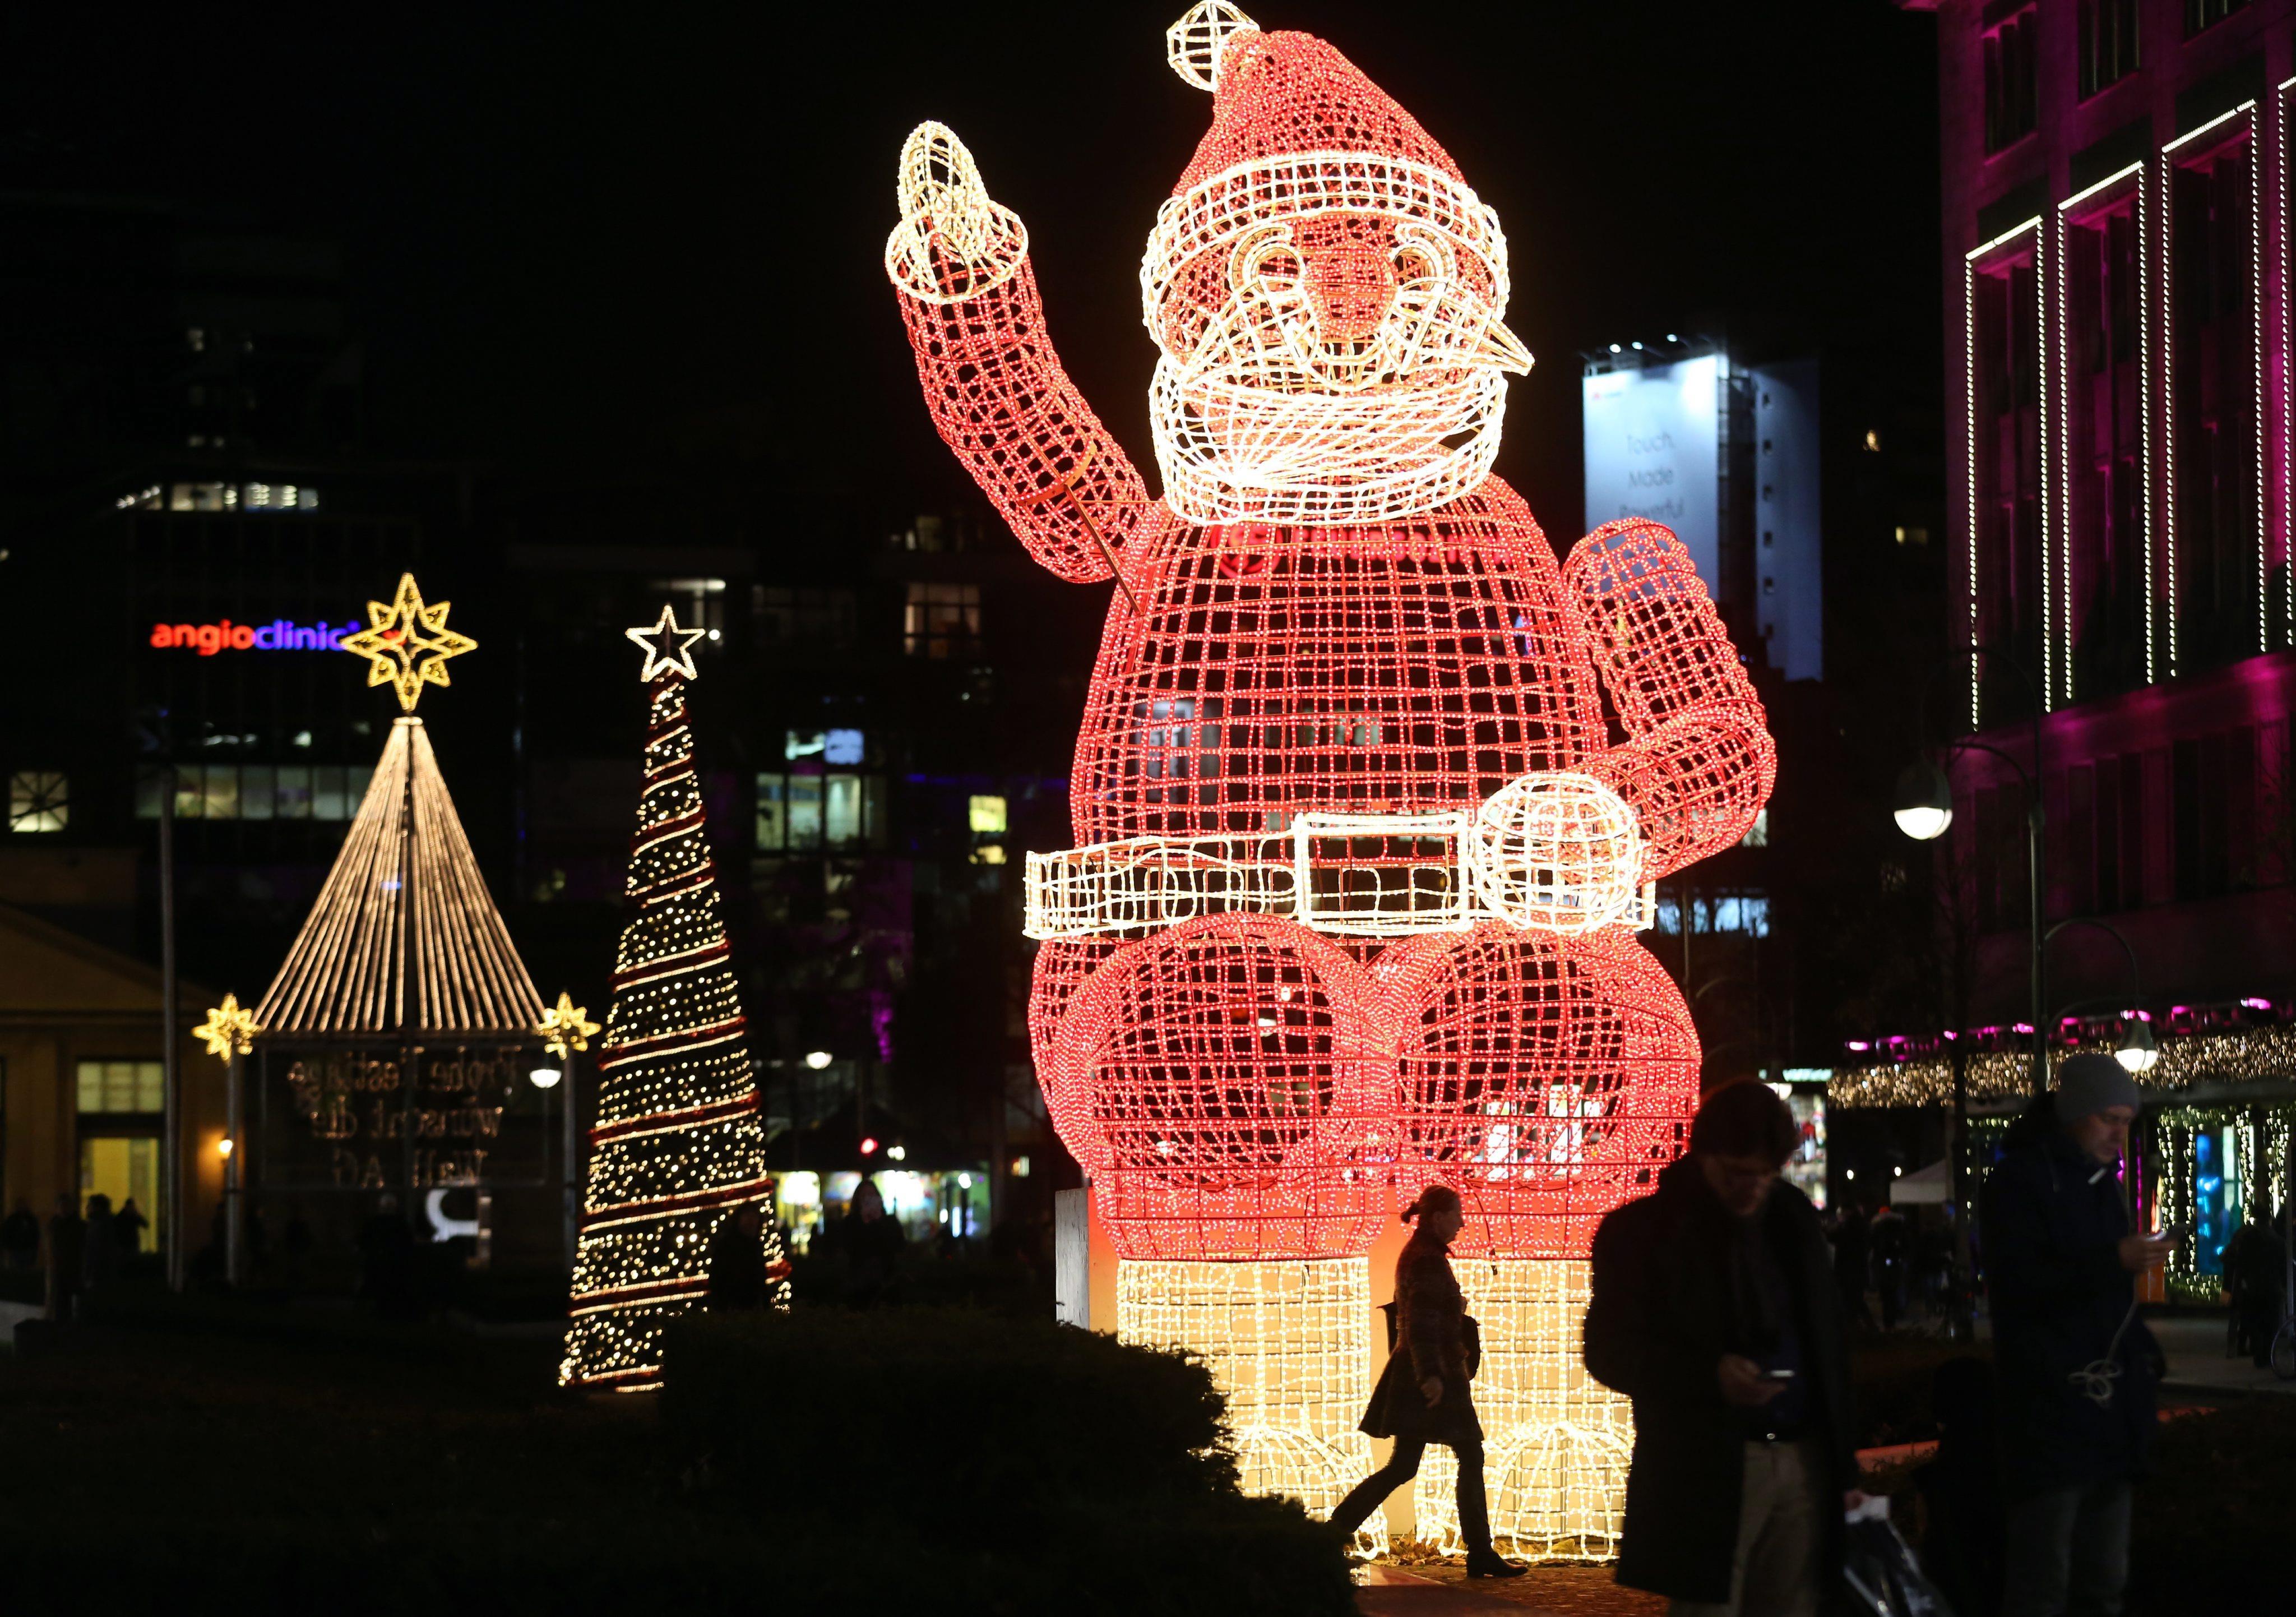 Christmas decorations on Kurfuerstendamm avenue in Berlin